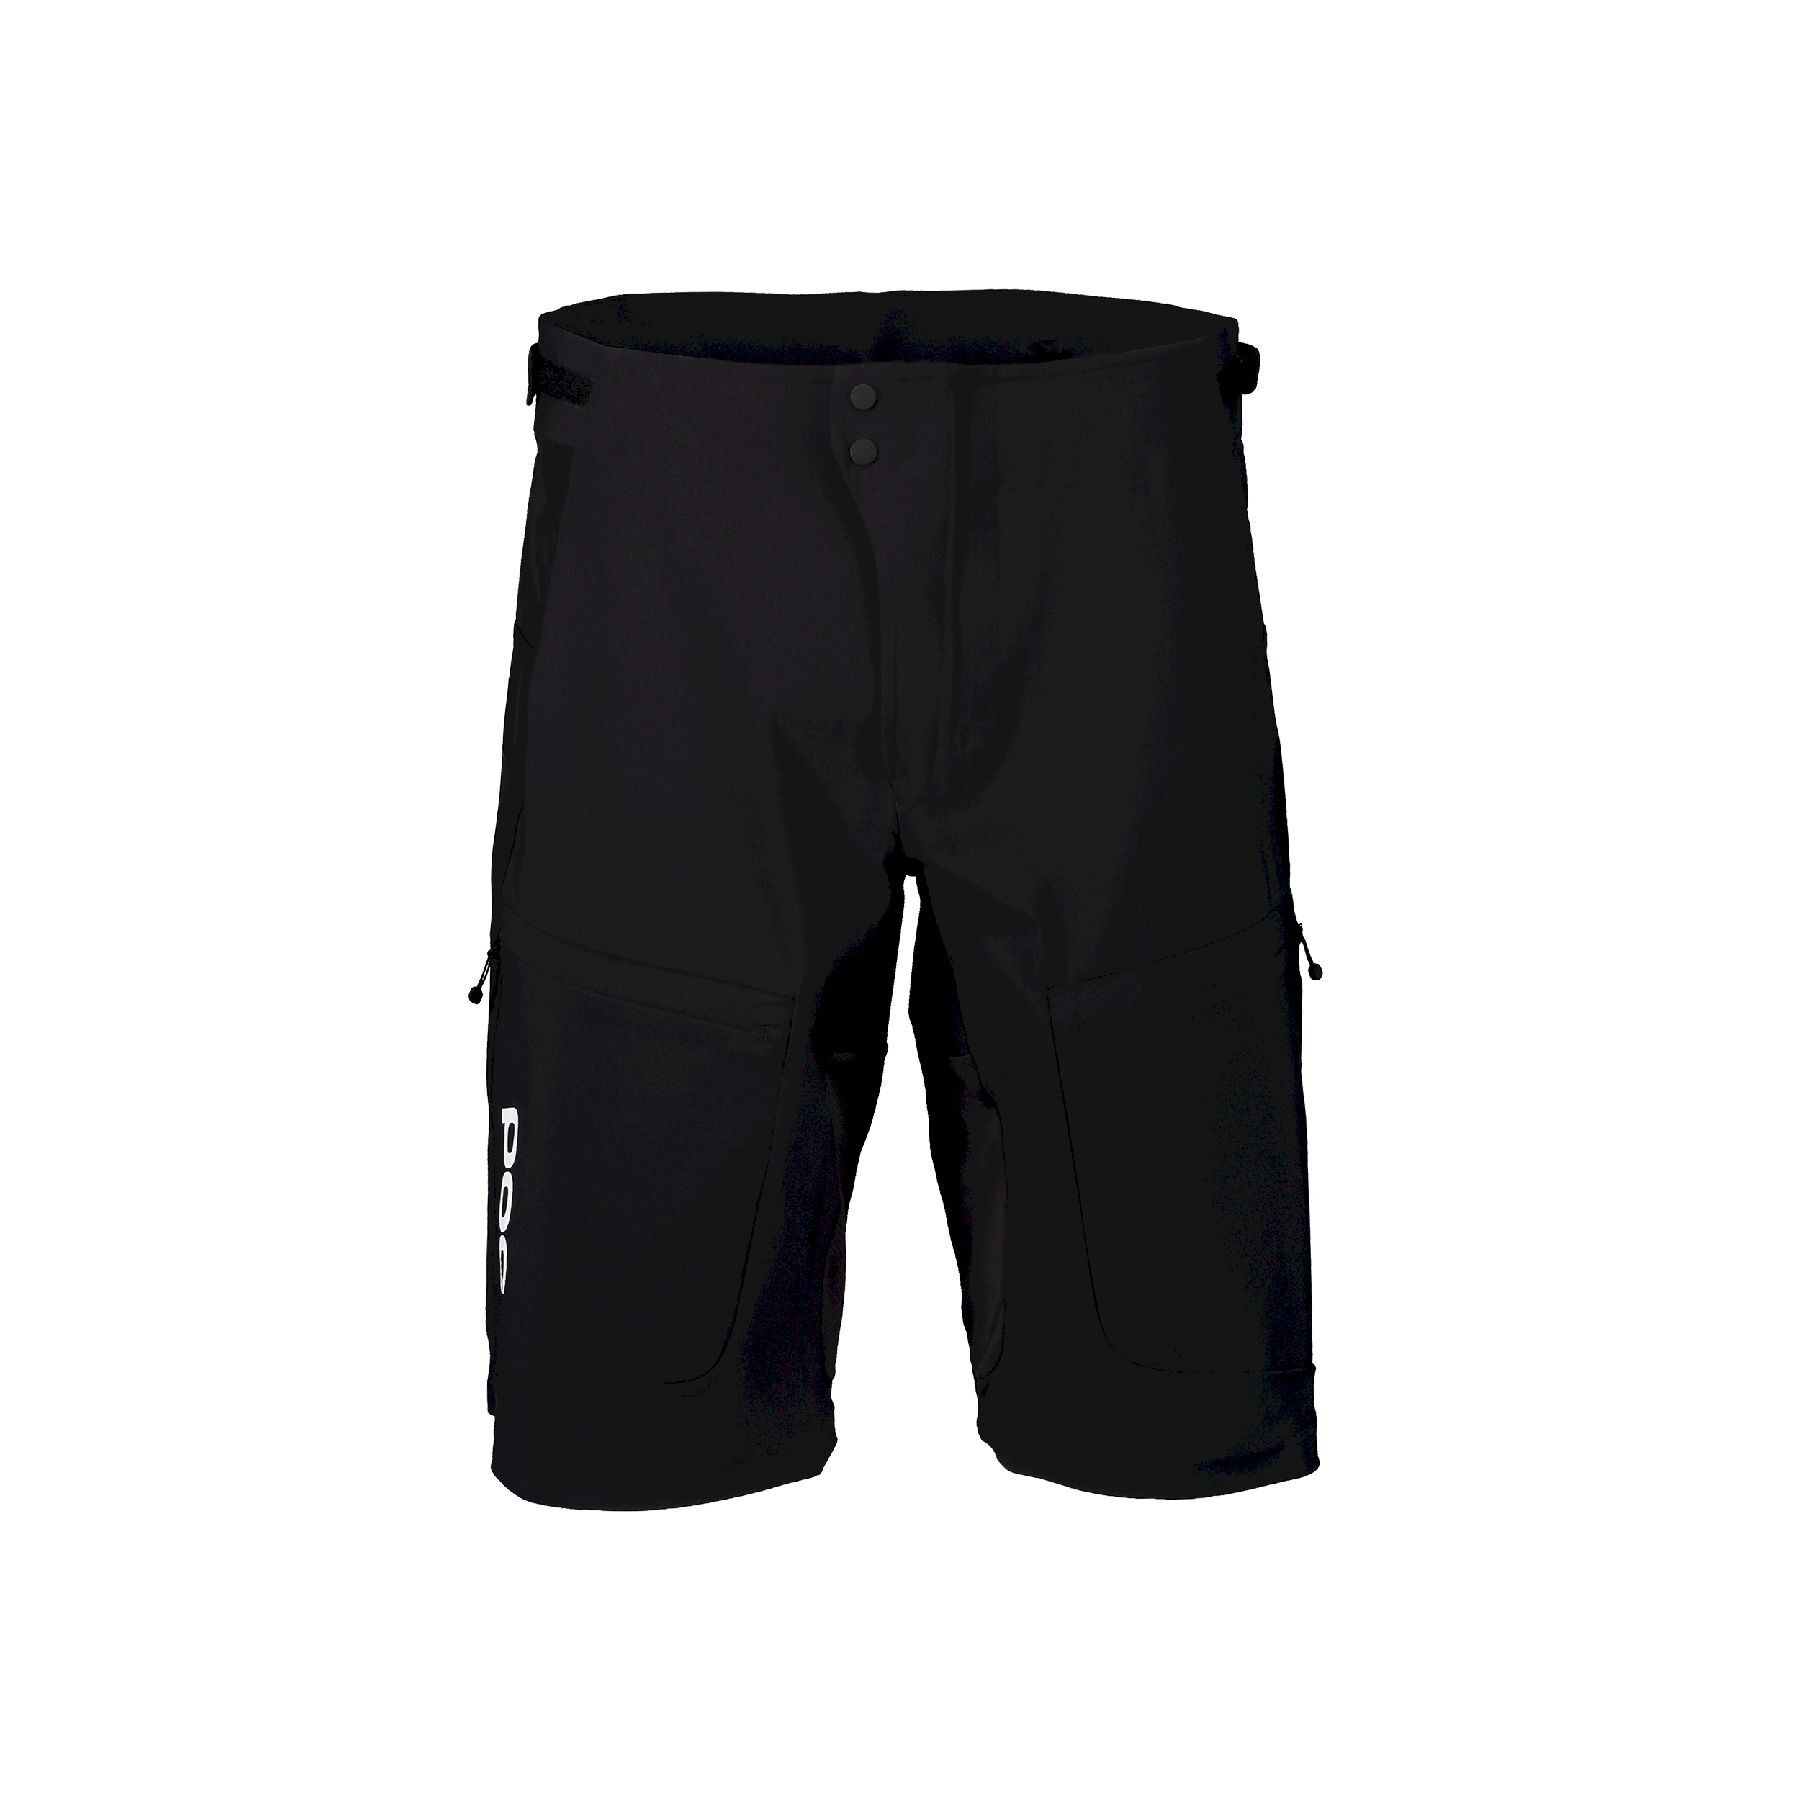 Poc Resistance Ultra Shorts - MTB shorts - Men's